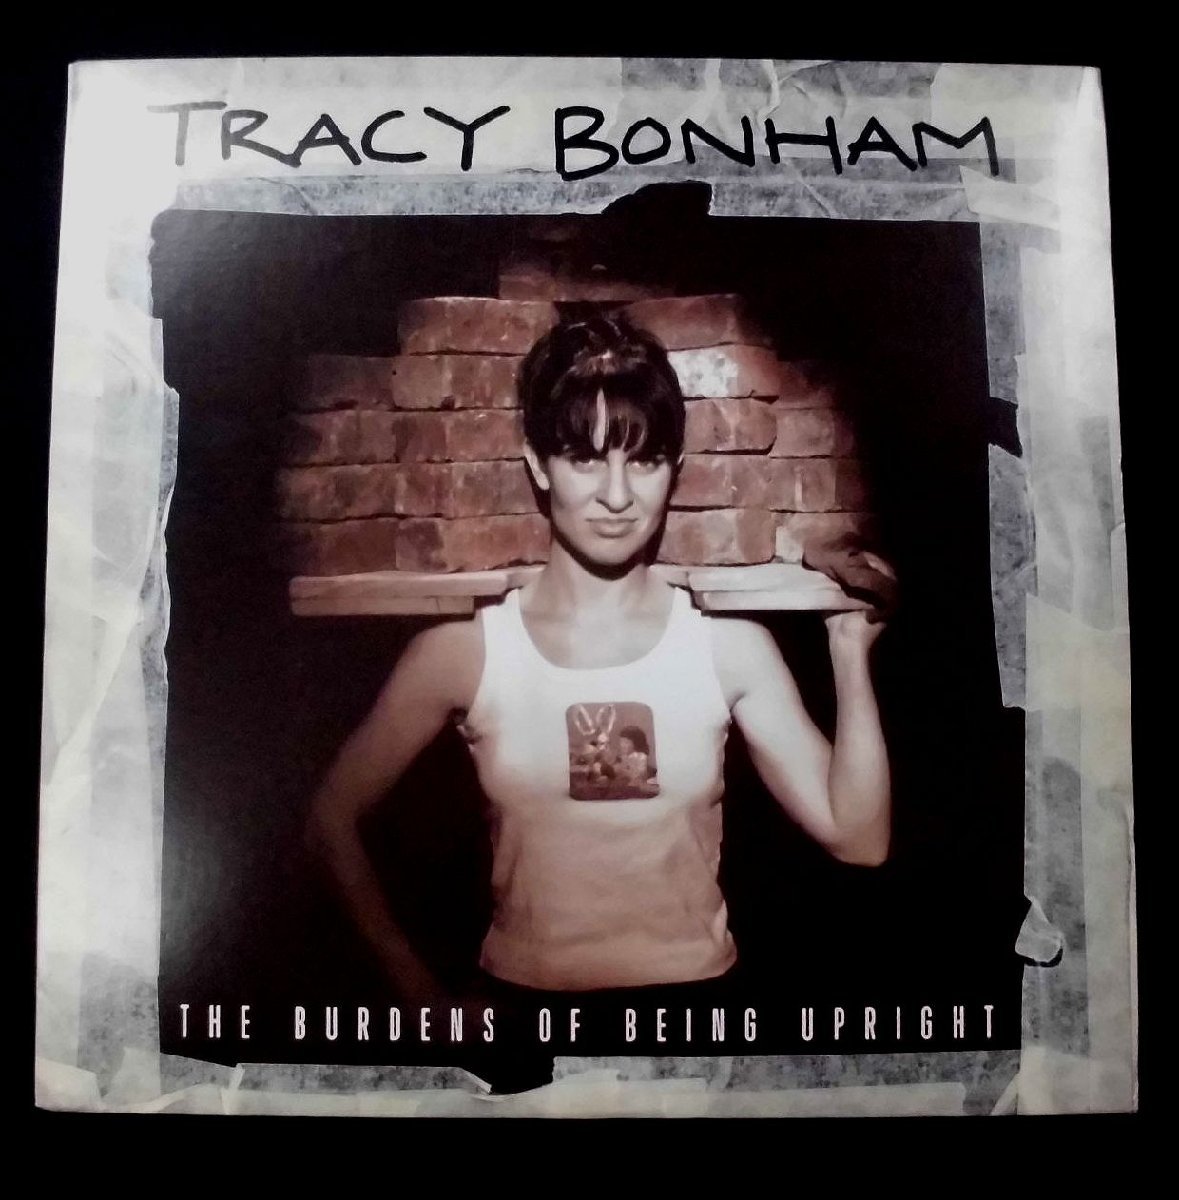 ■US-Island Recordsオリジナル””’96希少アナログ!!”” Tracy Bonham / The Burdens Of Being Upright_画像1